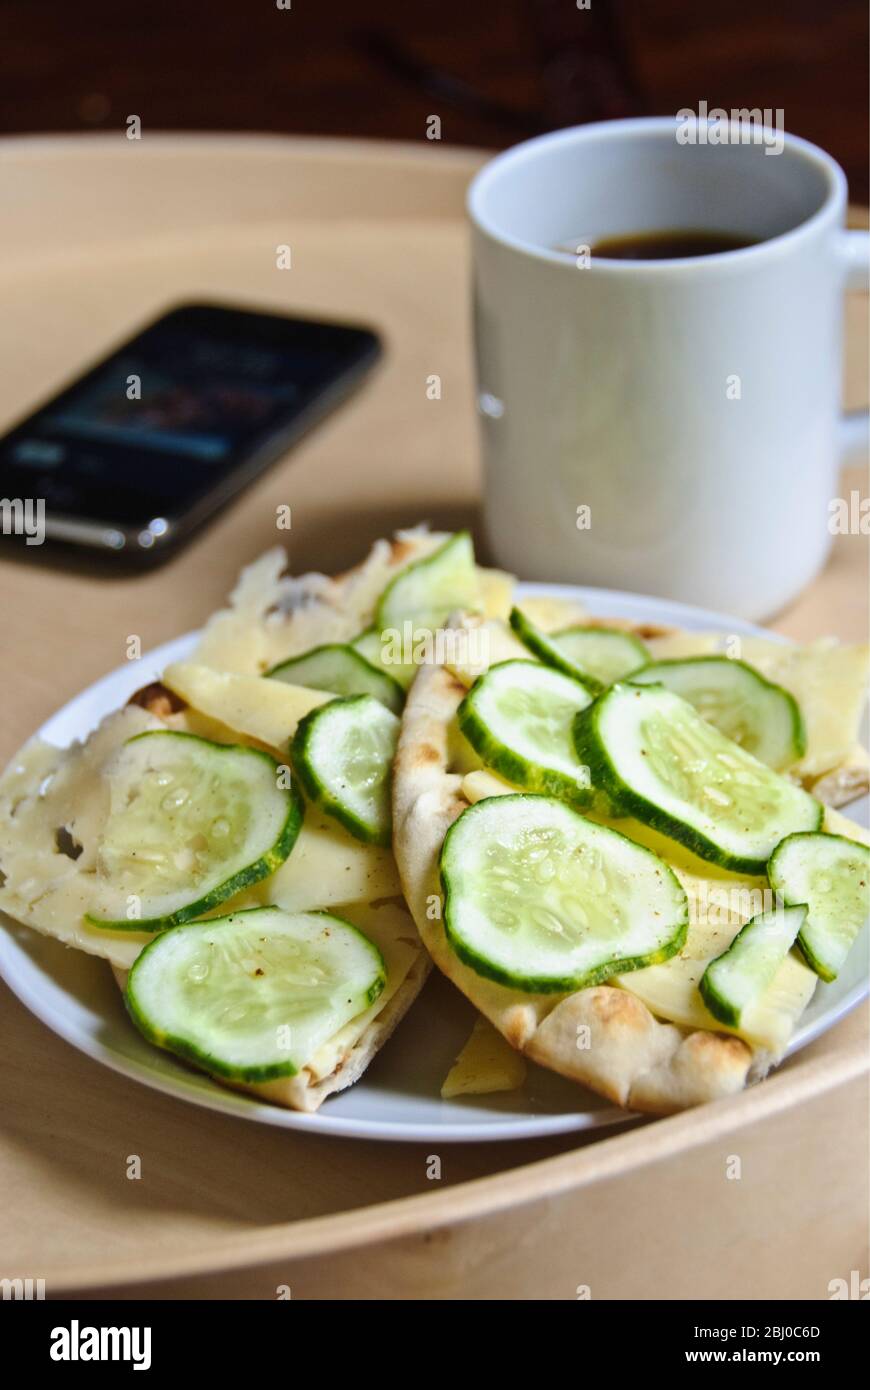 Aperitivo de pan plano escandinavo, con lonchas finas de queso sueco y pepino, sal de hierbas con agua, con taza de café negro e iphone o Foto de stock